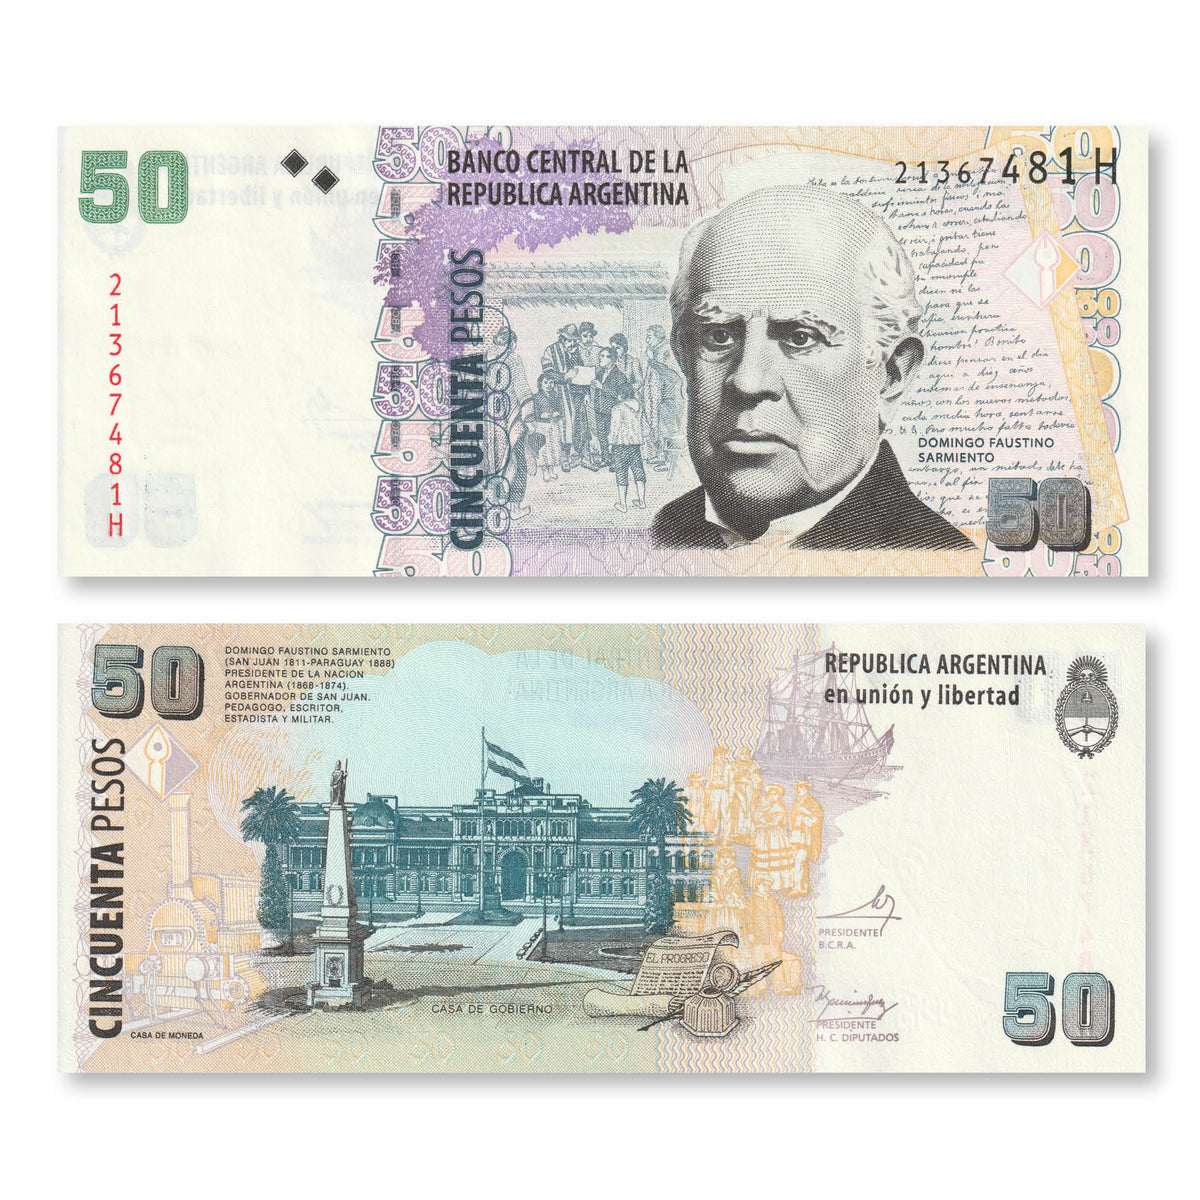 Argentina 50 Pesos, 2013, B409f, P356, UNC - Robert's World Money - World Banknotes